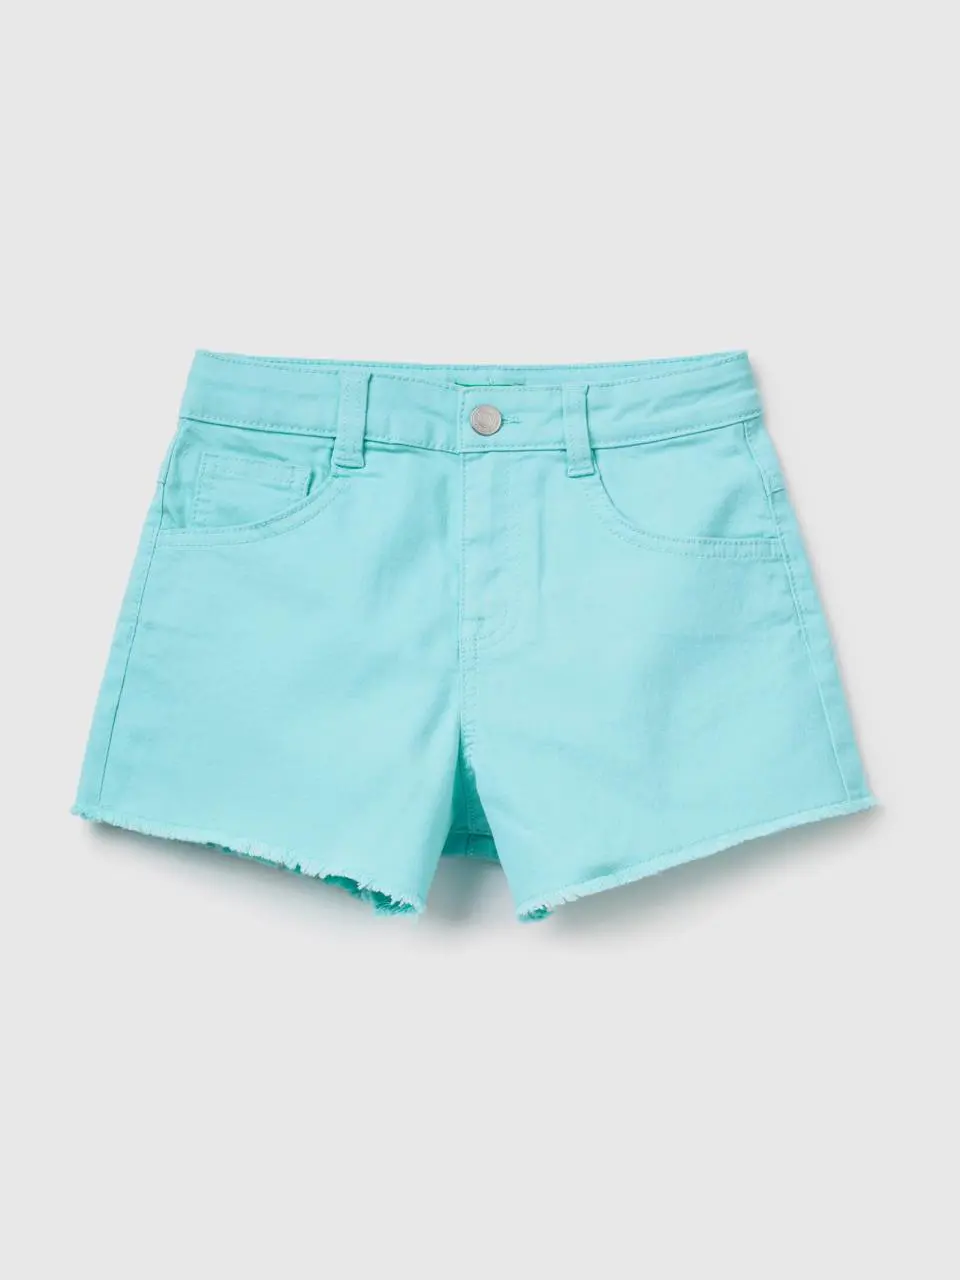 Benetton frayed high-waisted shorts. 1